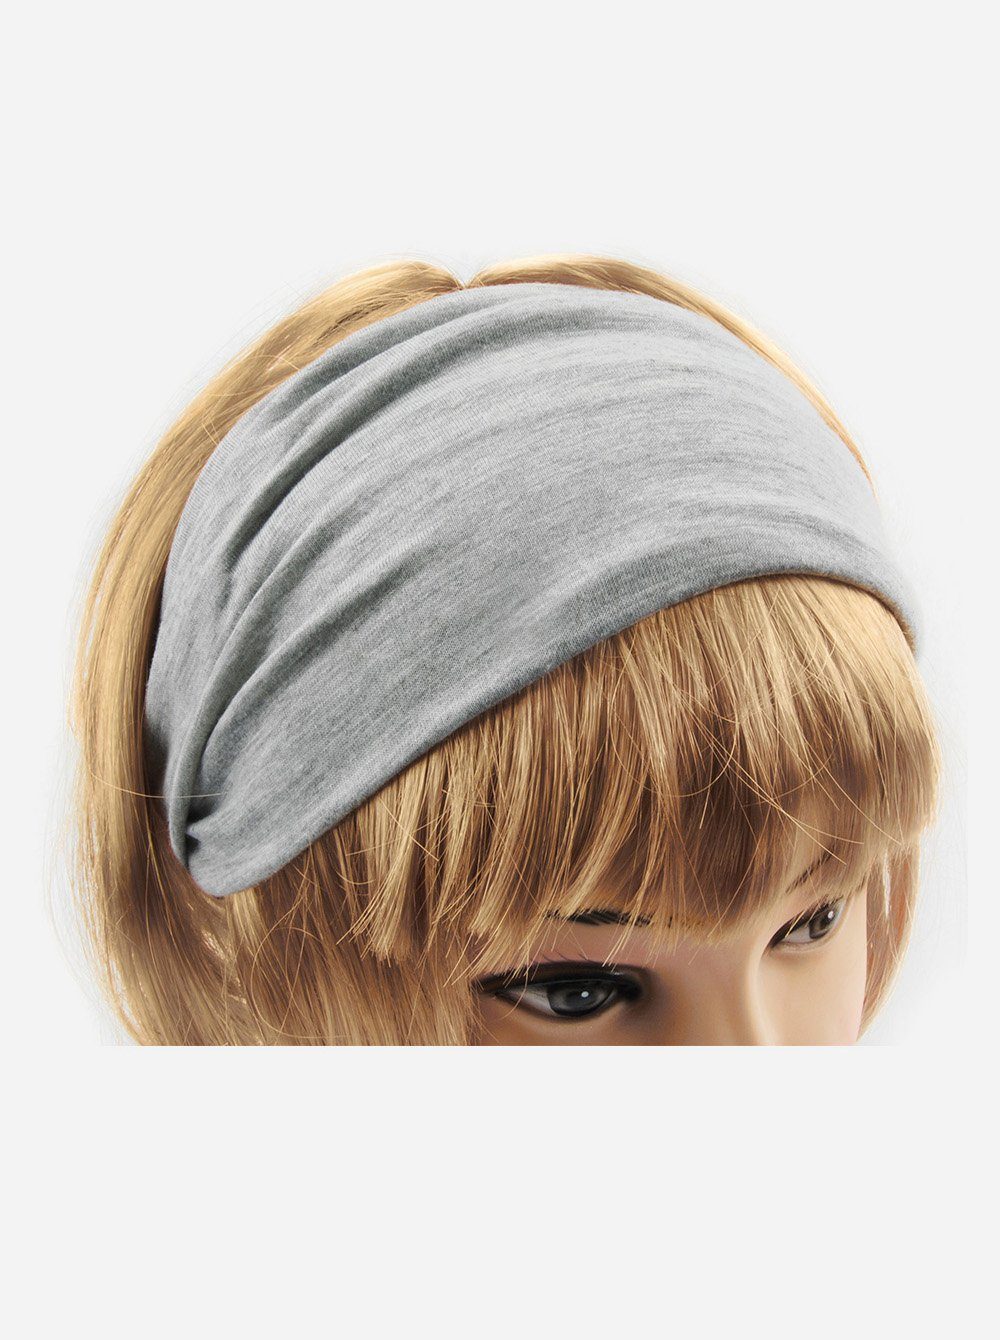 Hellgrau Haarband Damen Kopfband, für und Hairband Haarband Yoga axy Sport Stirnband